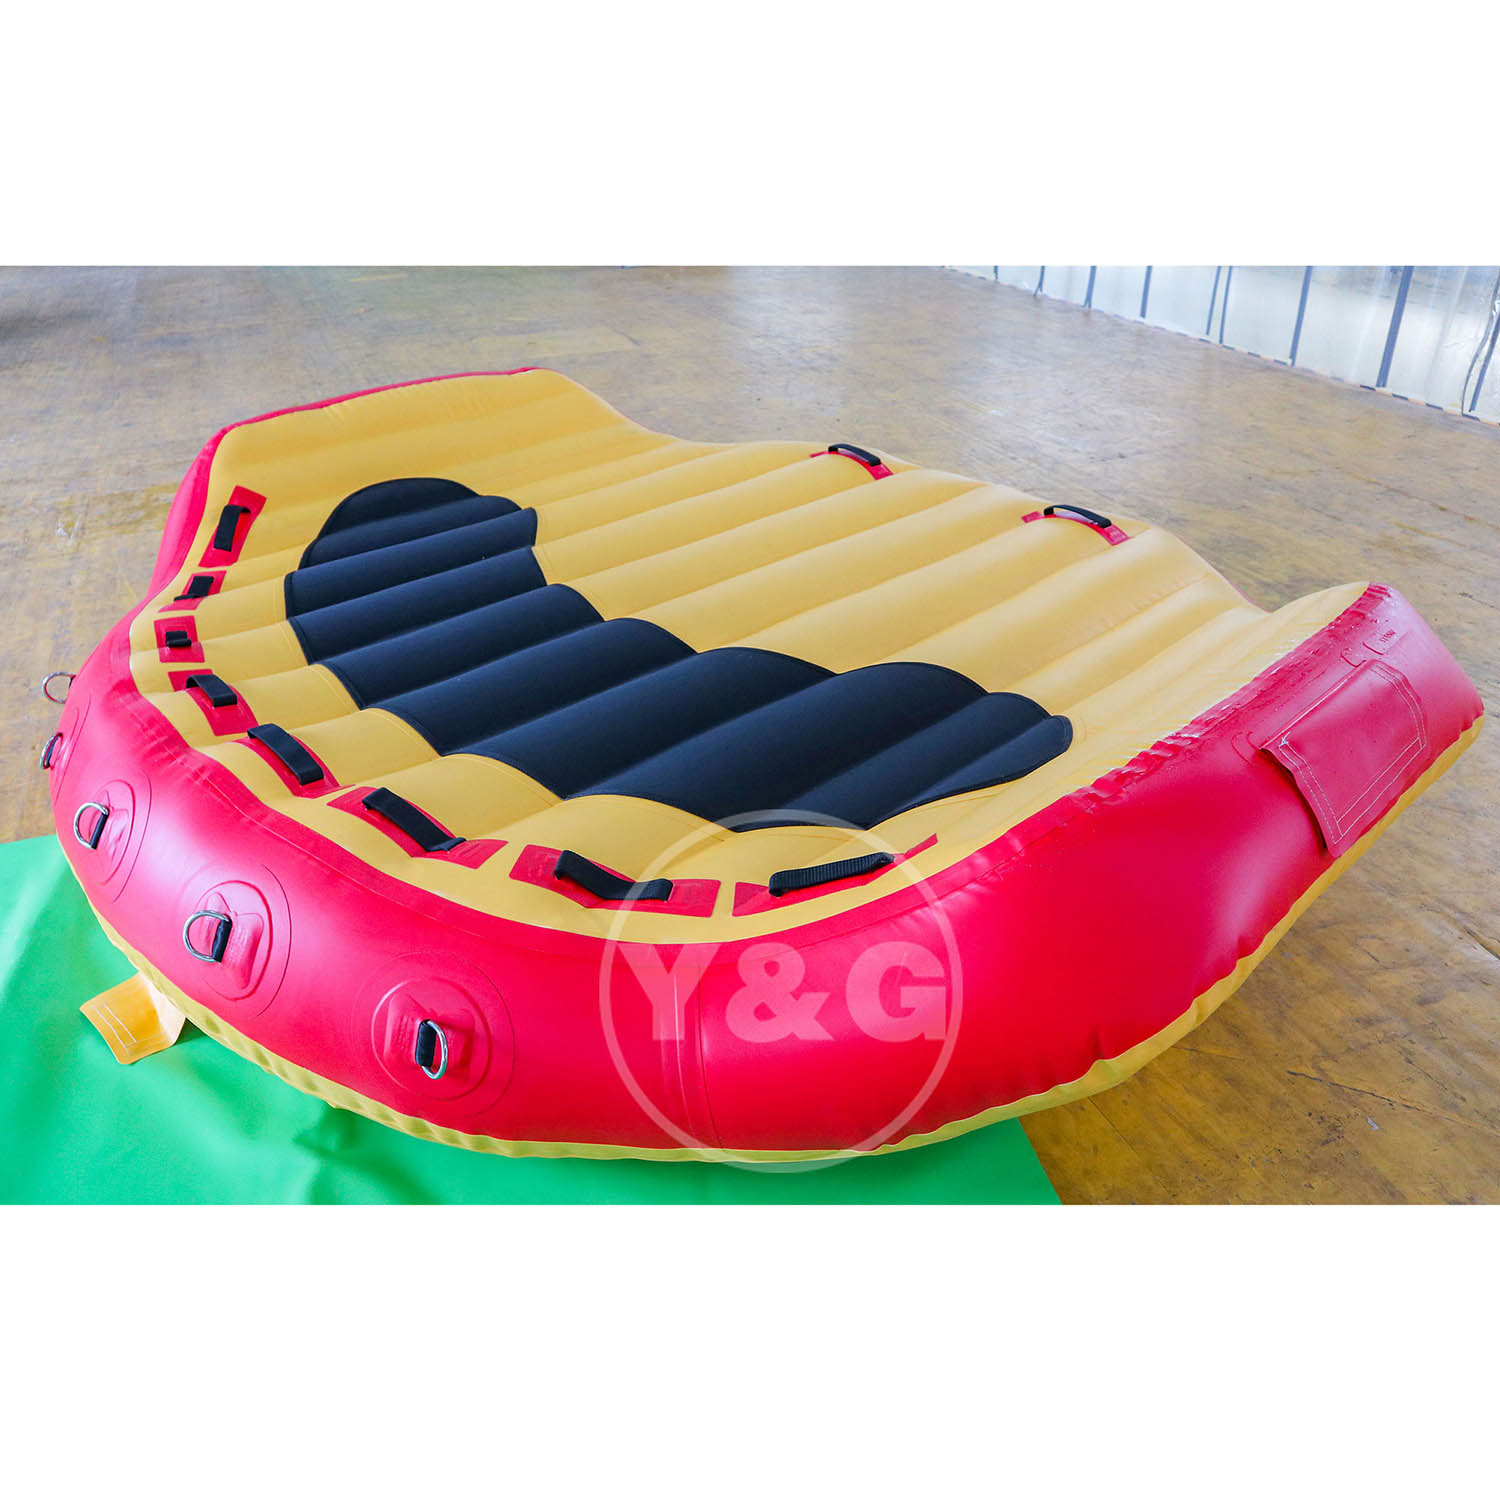 Custom Inflatable Tug BoatTugboat14